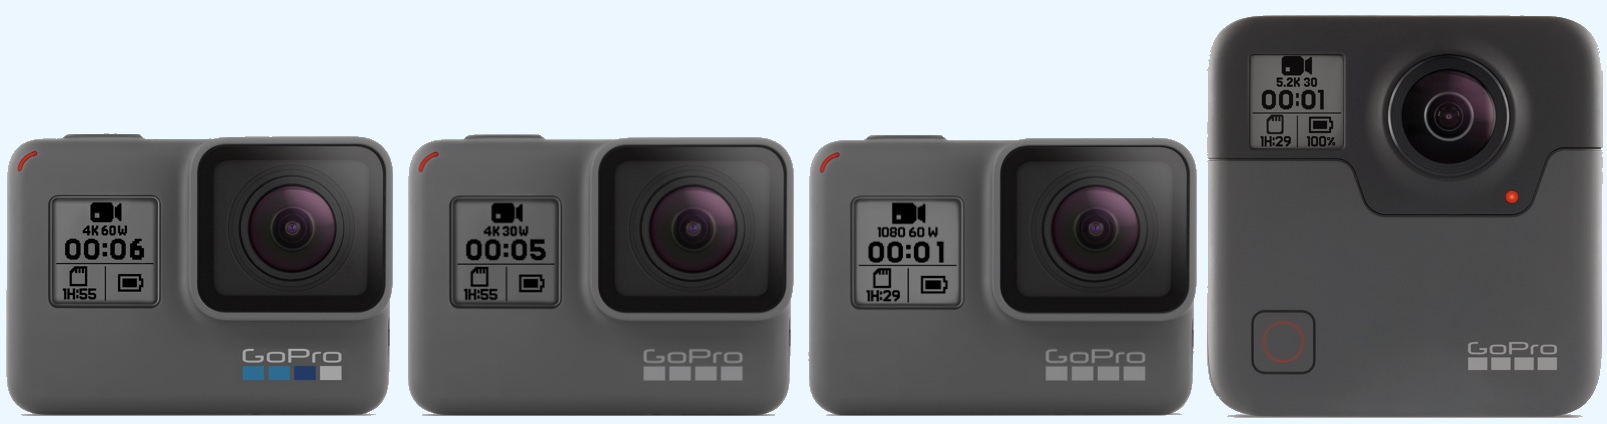 GoPro HERO6, HERO5, HERO and FUSION cameras